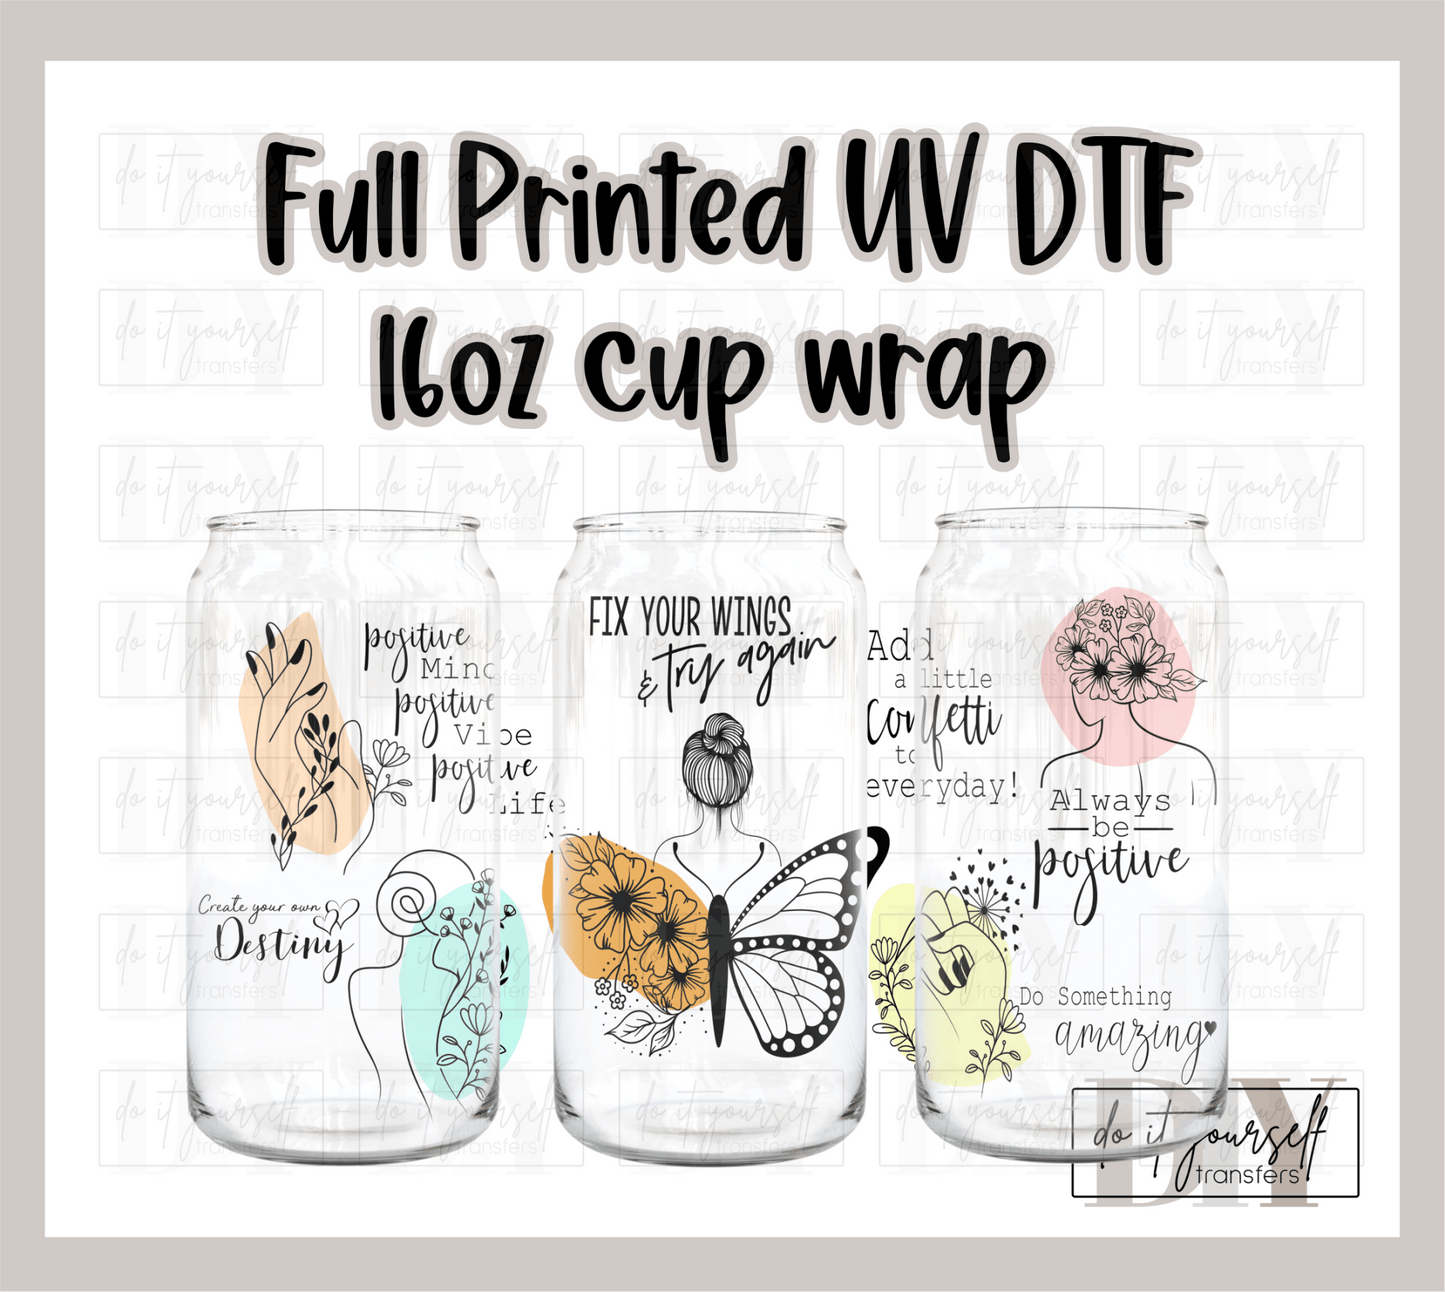 RTS Positive Mot UV DTF 16 oz Libbey cup wrap - Do it yourself Transfers